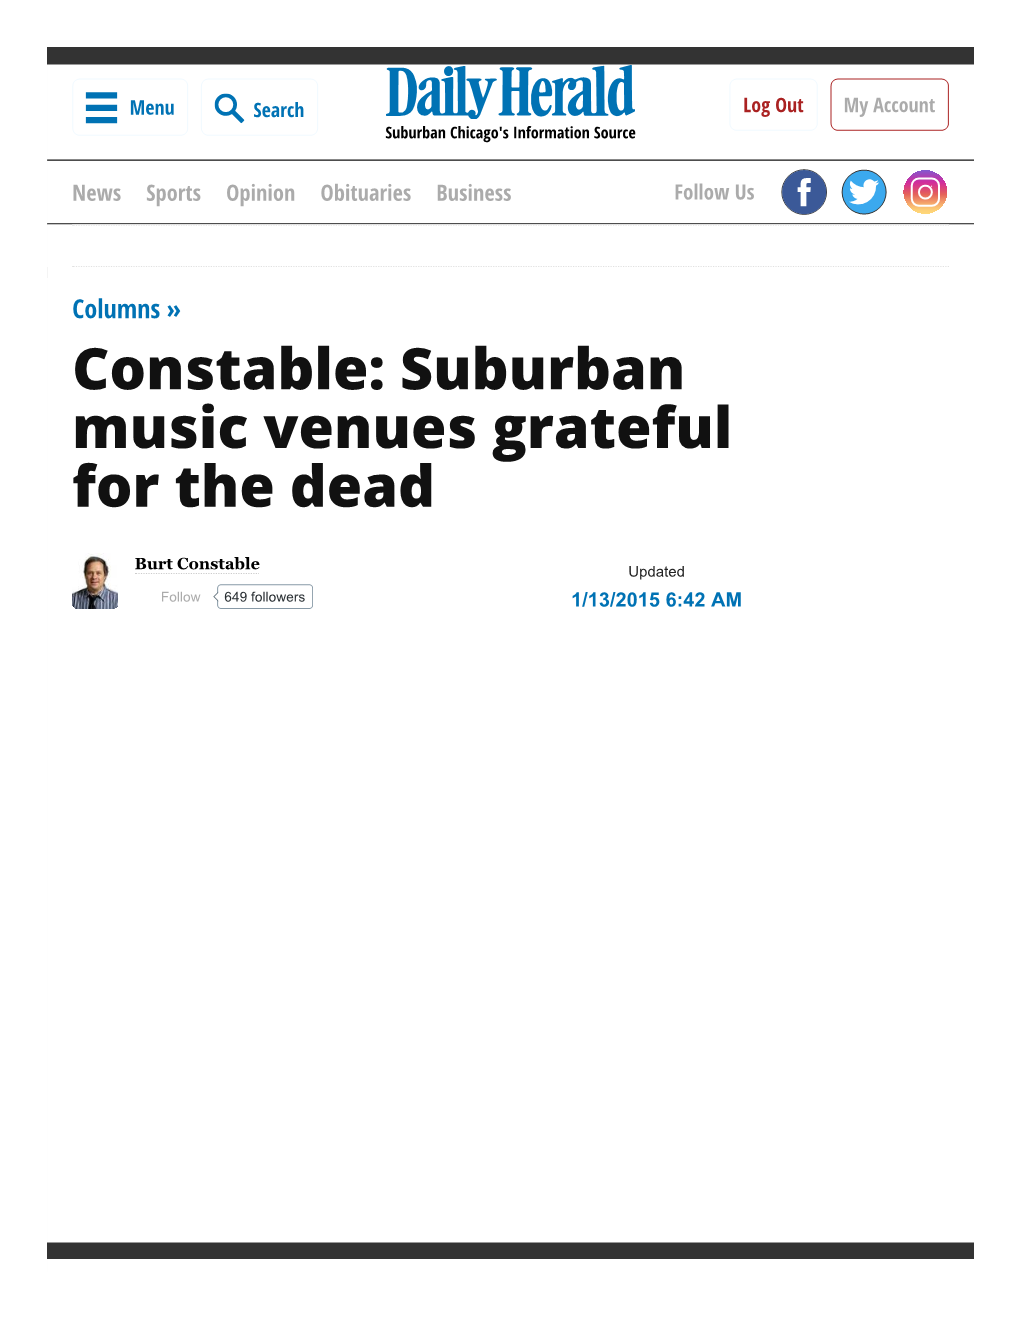 Constable: Suburban Music Venues Grateful for the Dead